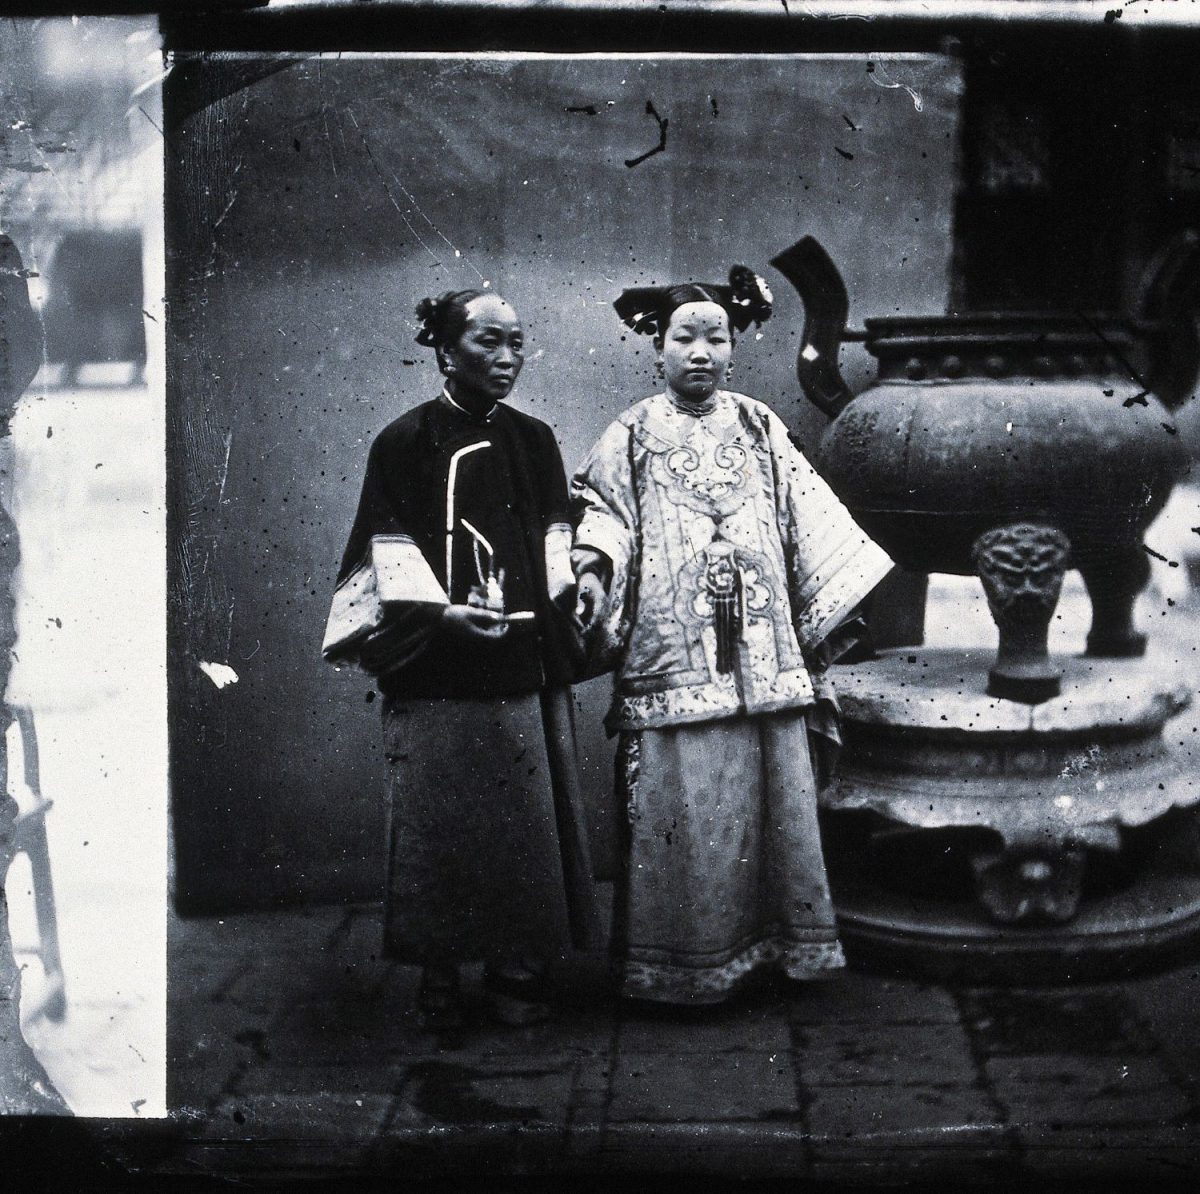 John Thomson, China, photography, portraits, travel, 1800s, Scottish